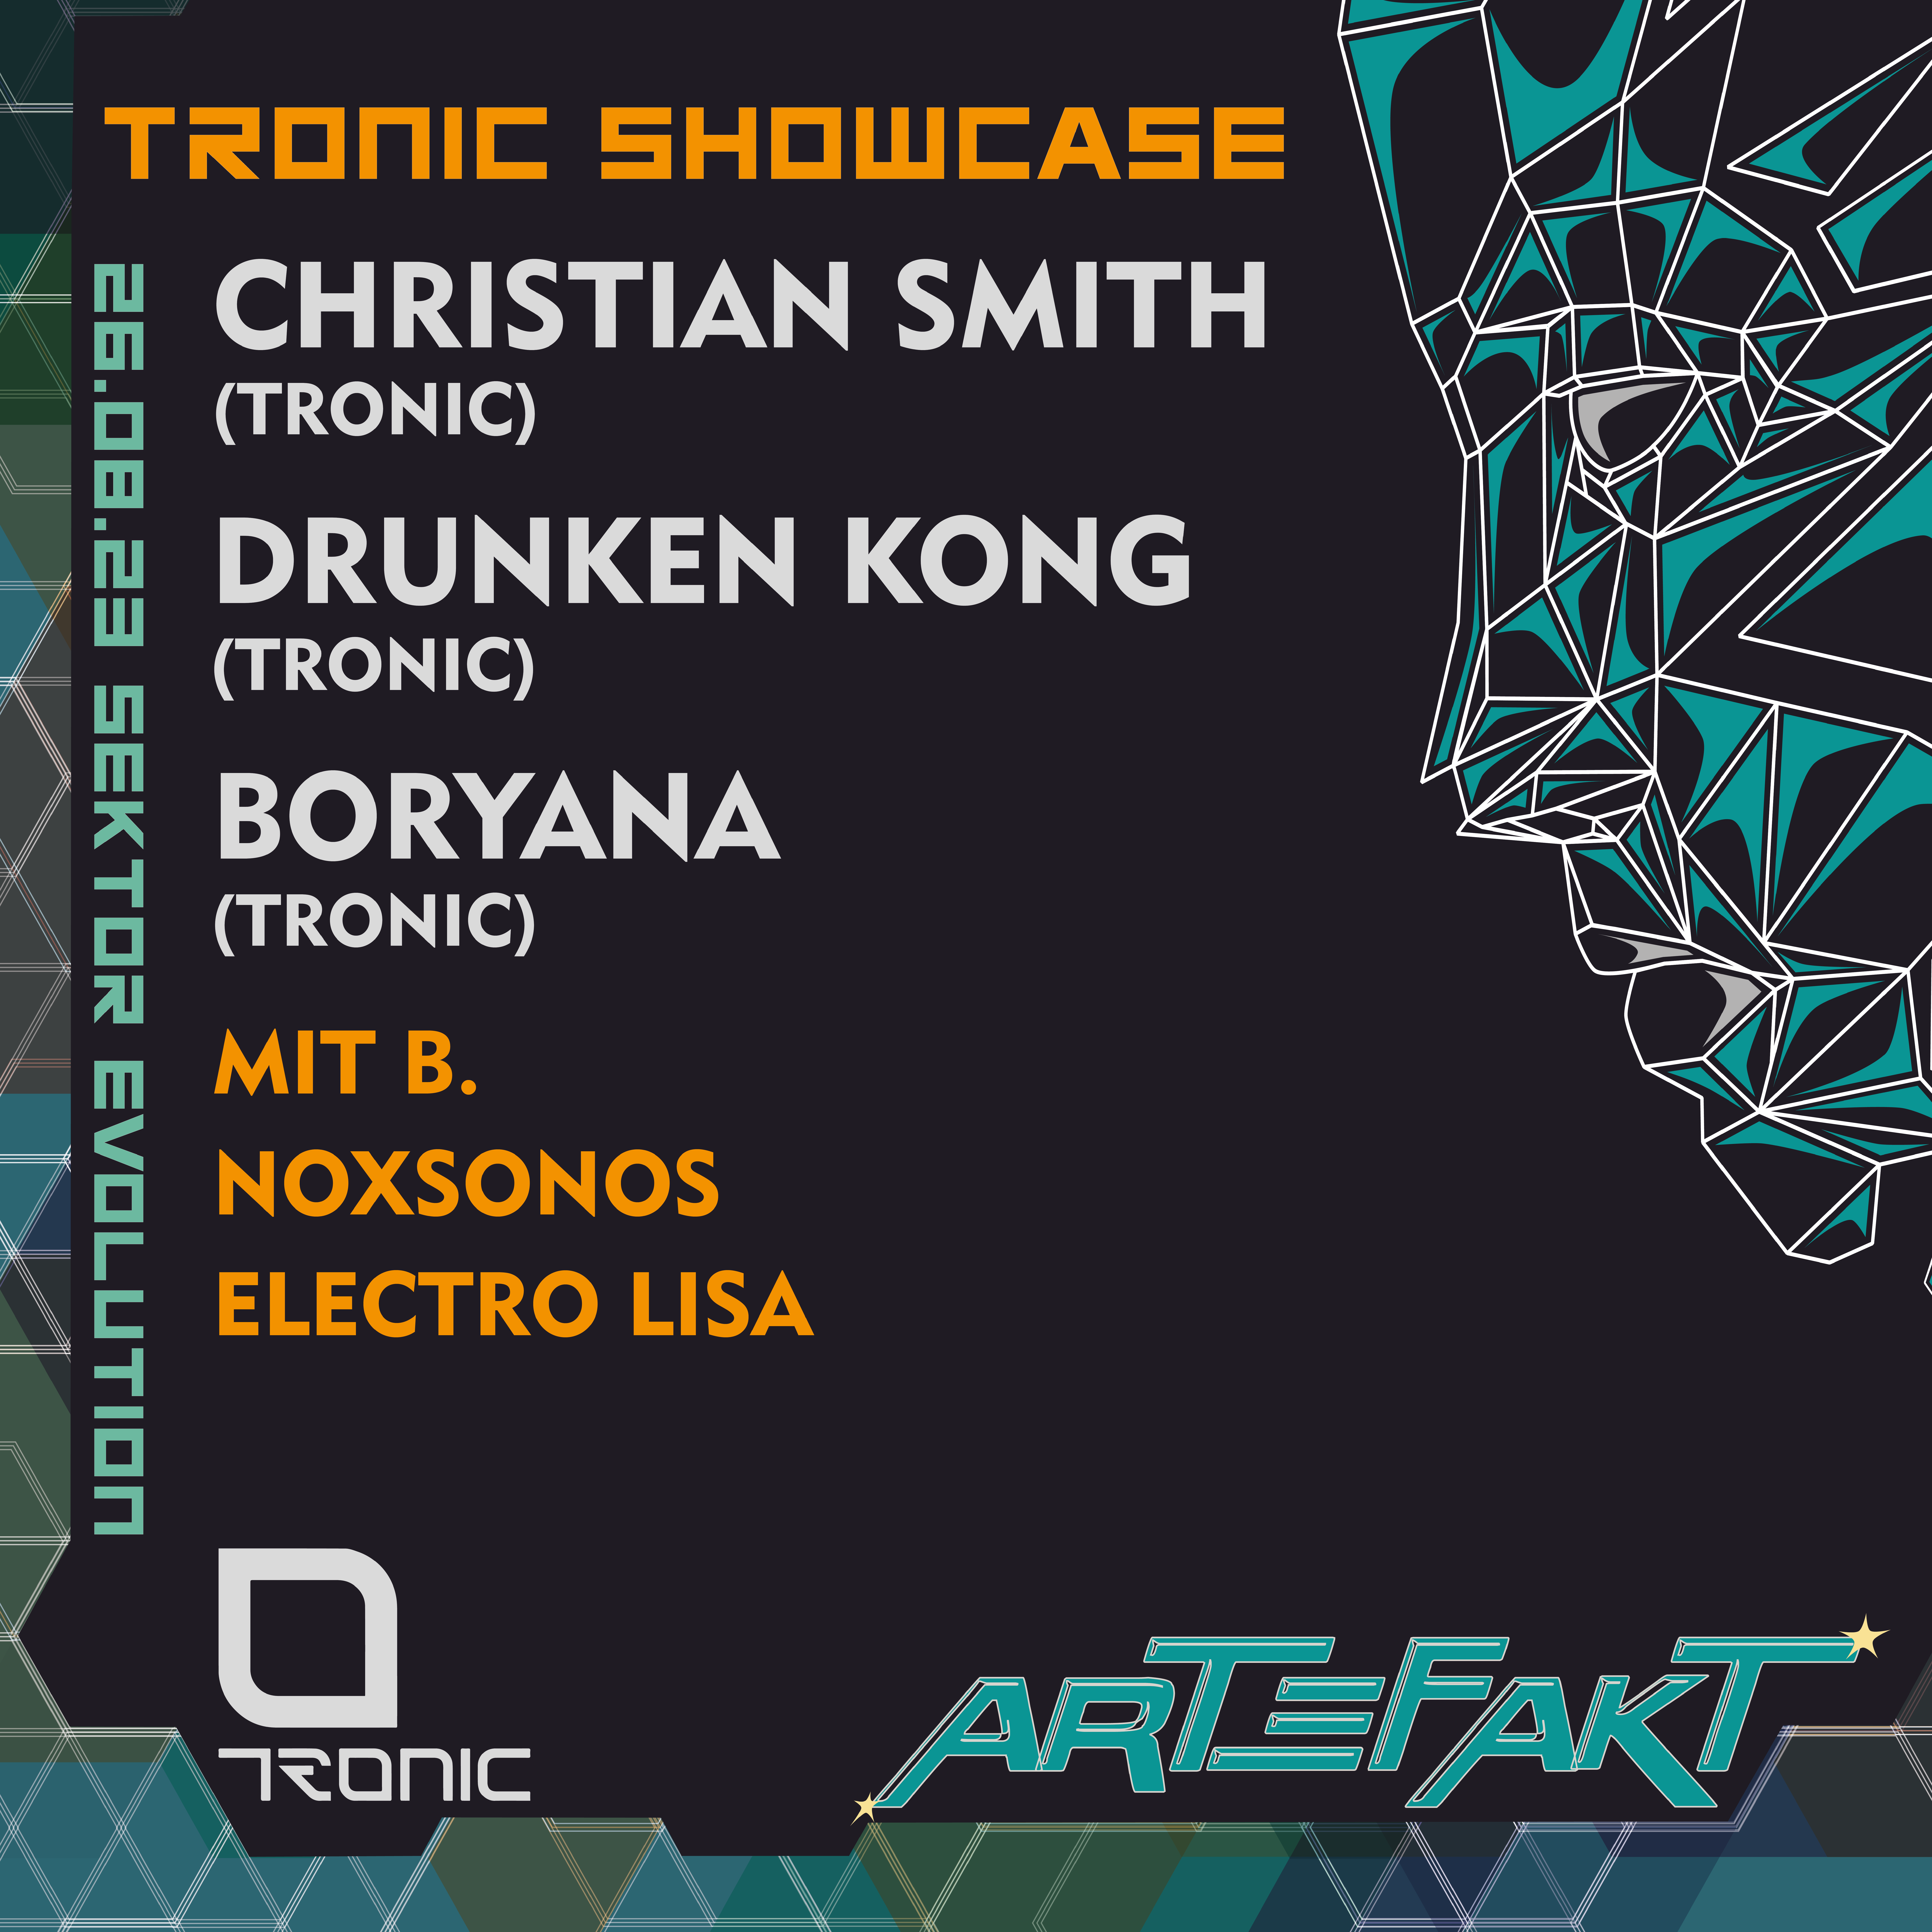 TRONIC Showcase x ARTEFAKT